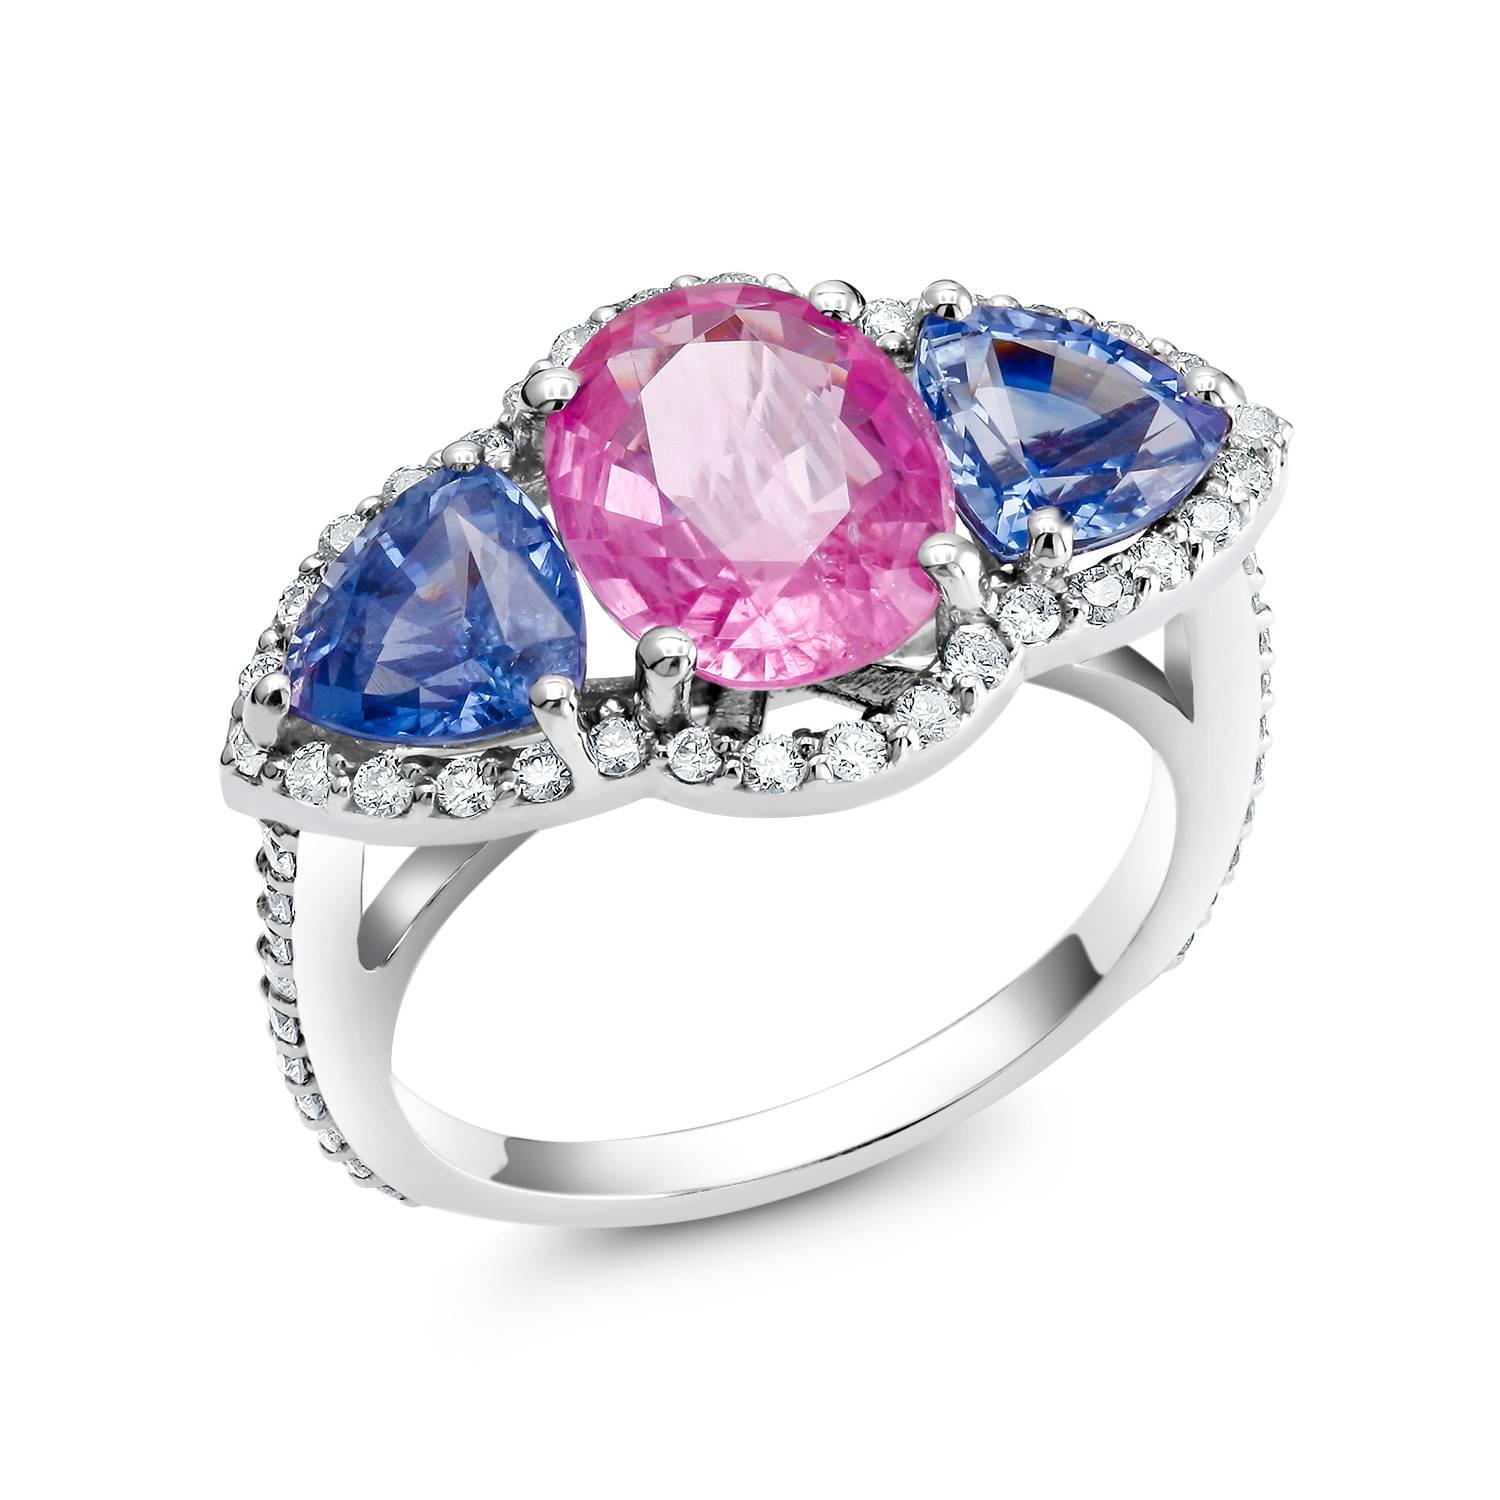 Cushion Cut Ceylon Pink Cushion and Trillion Blue Sapphires Diamond Cocktail Cluster Ring